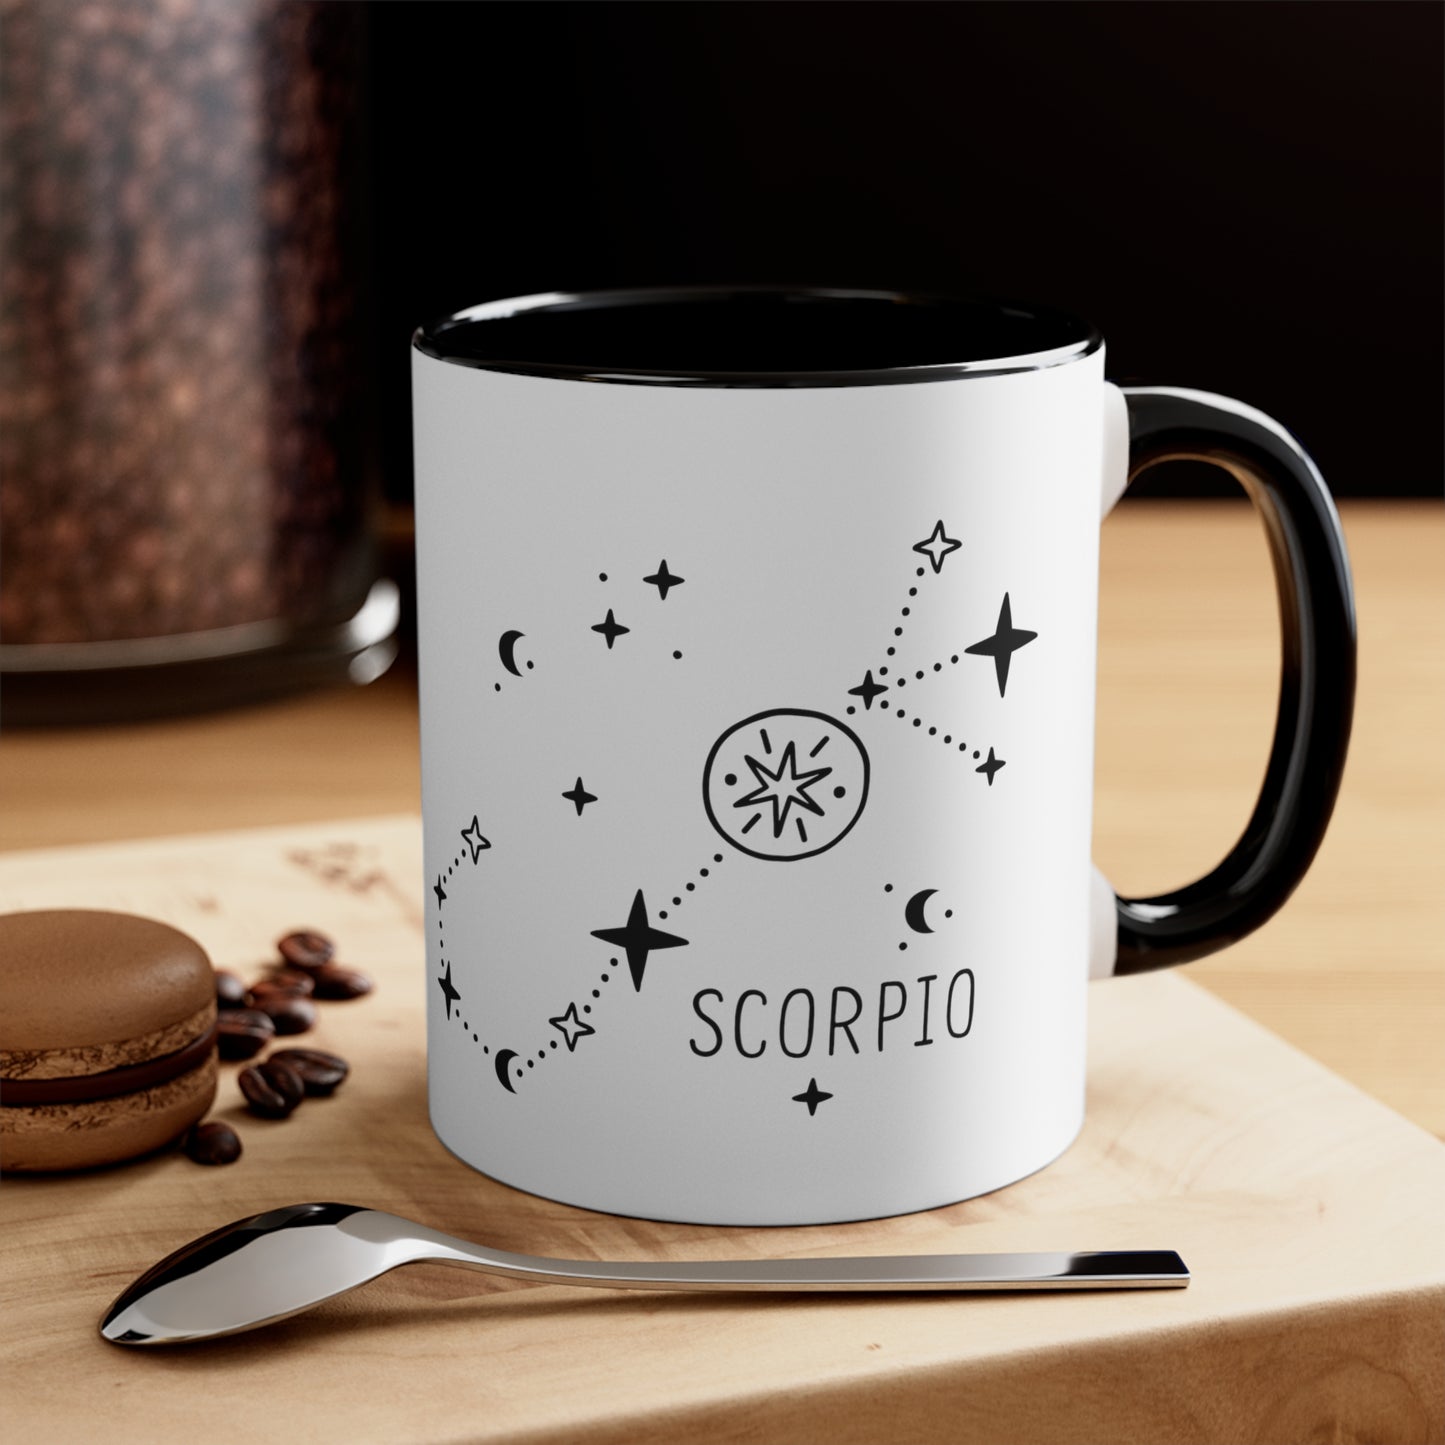 Scorpio constellation coffee mug